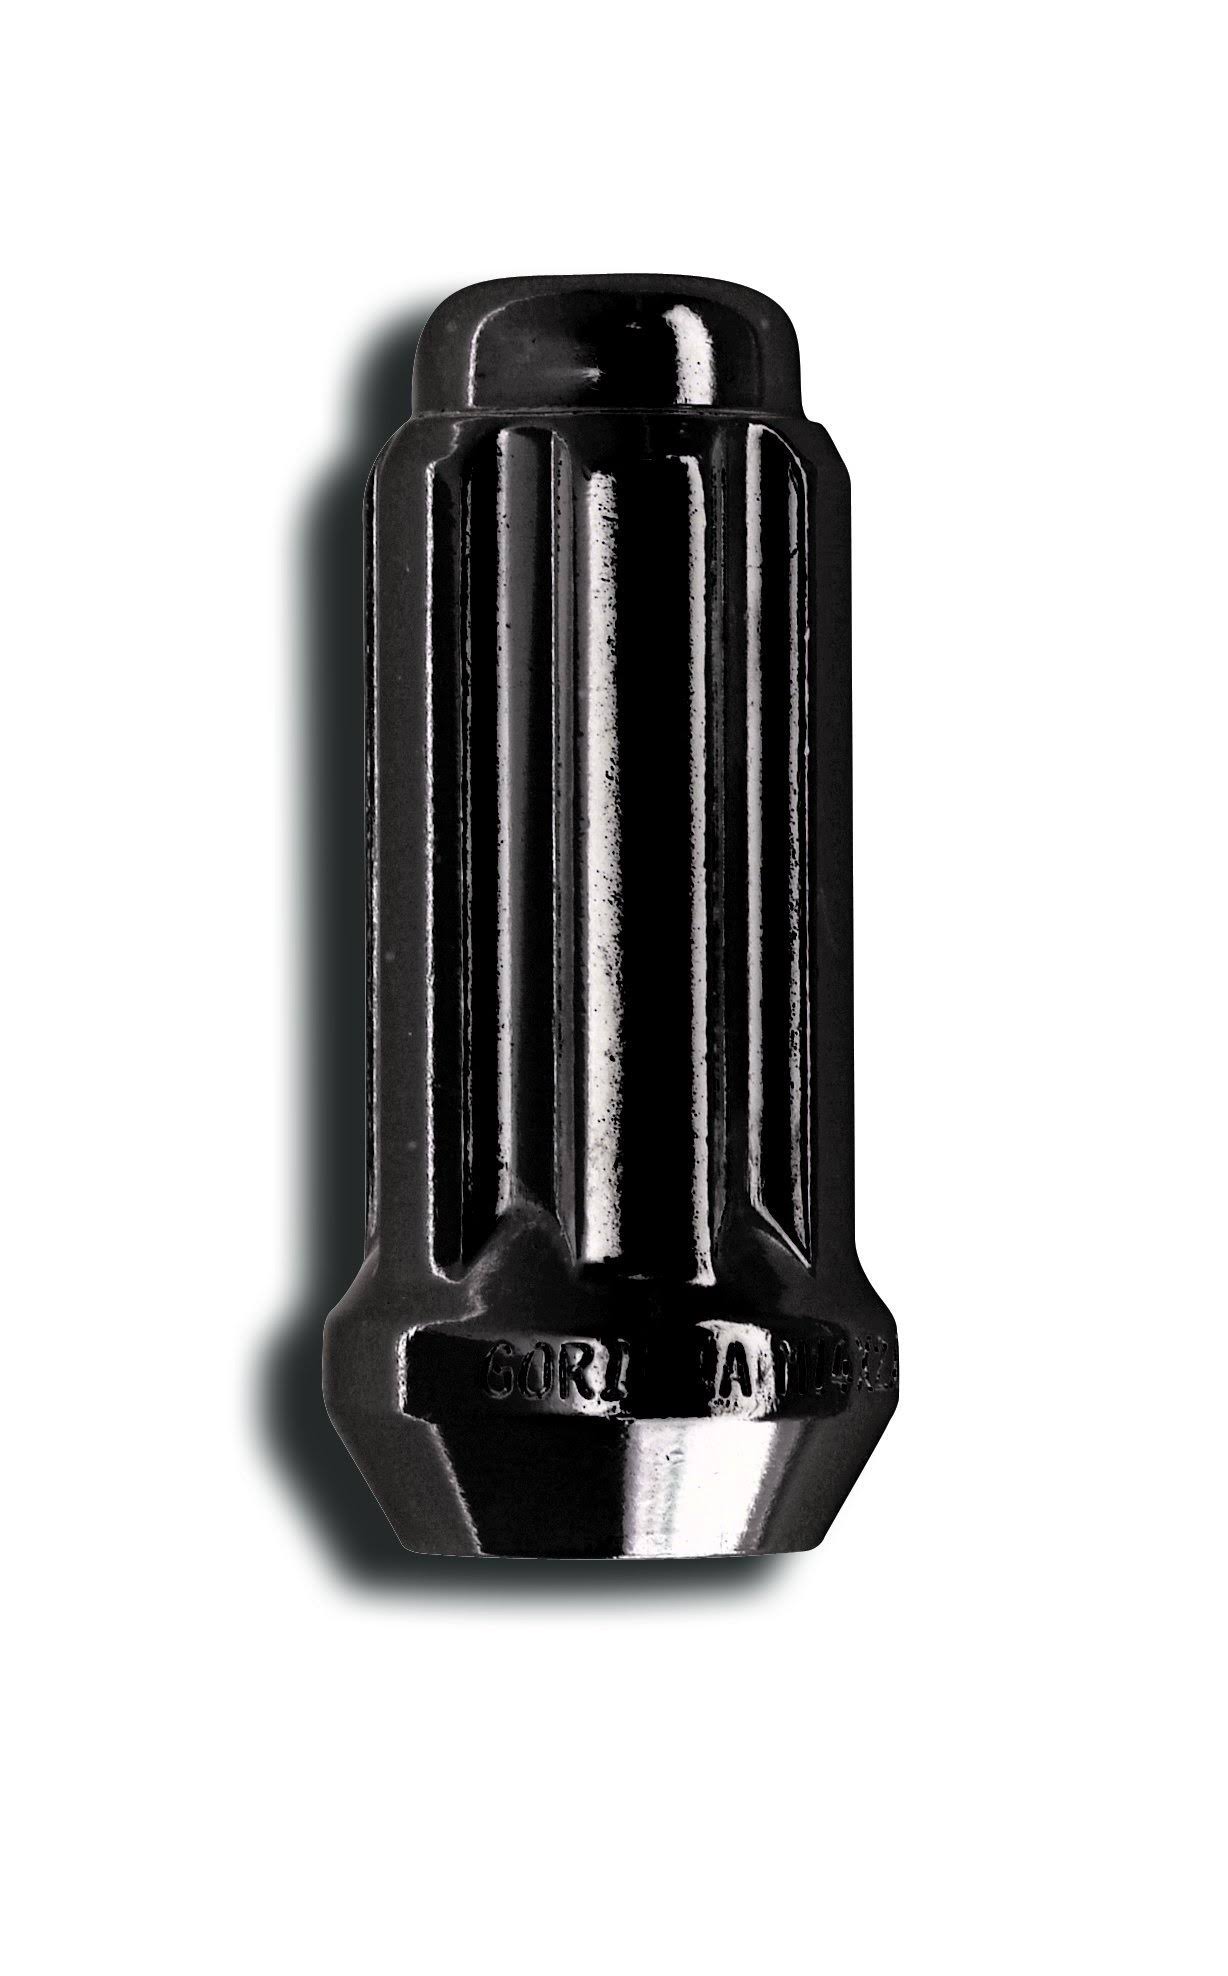 Gorilla Automotive 26145BC Duplex Black Chrome Lug Nut - 14-Millimeter by 1.5 Thread Size - 32 Pack